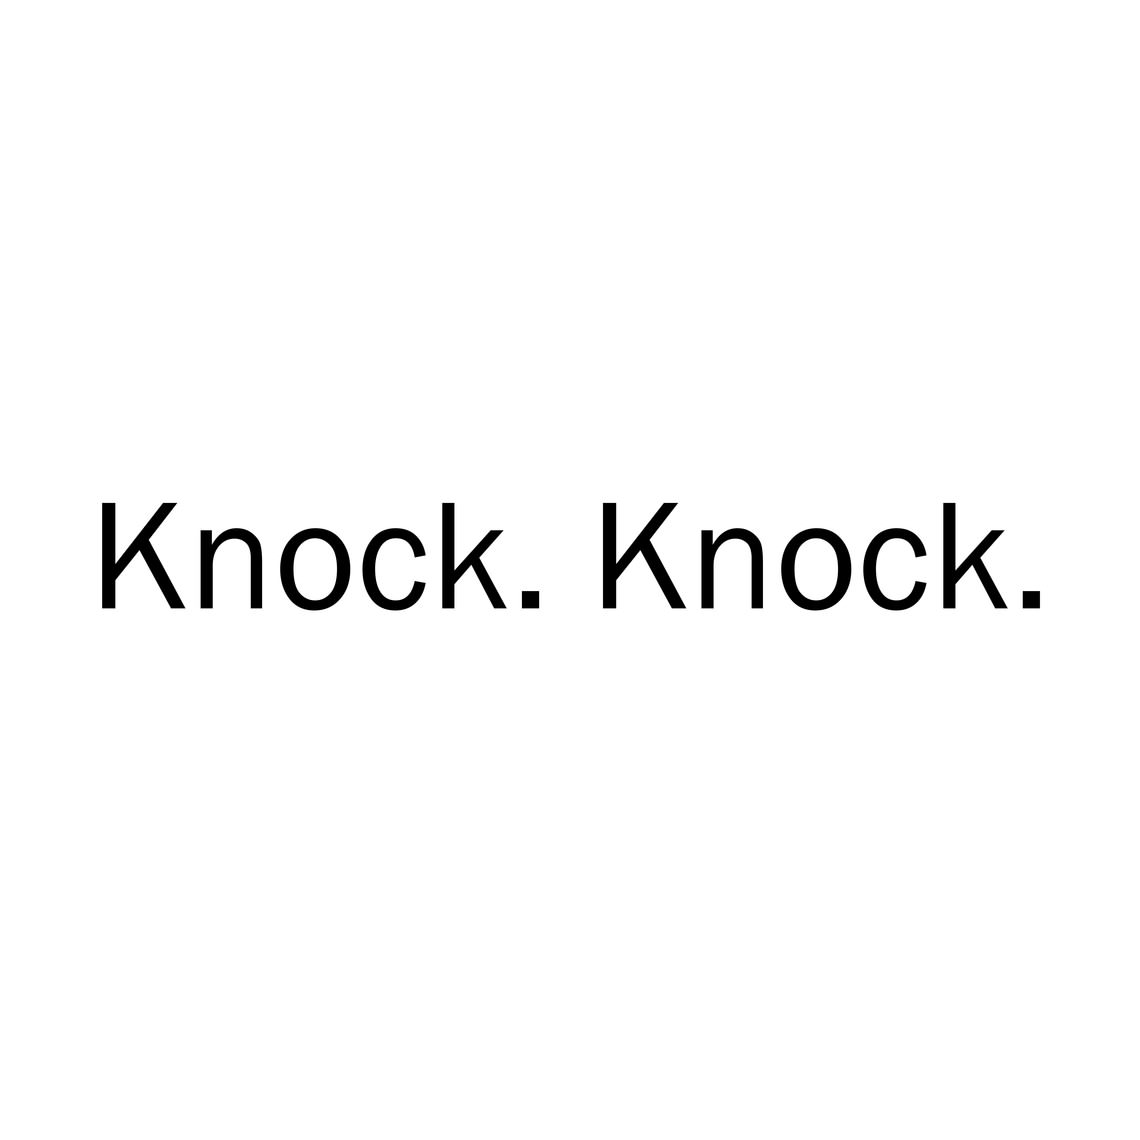  - Knock. Knock.